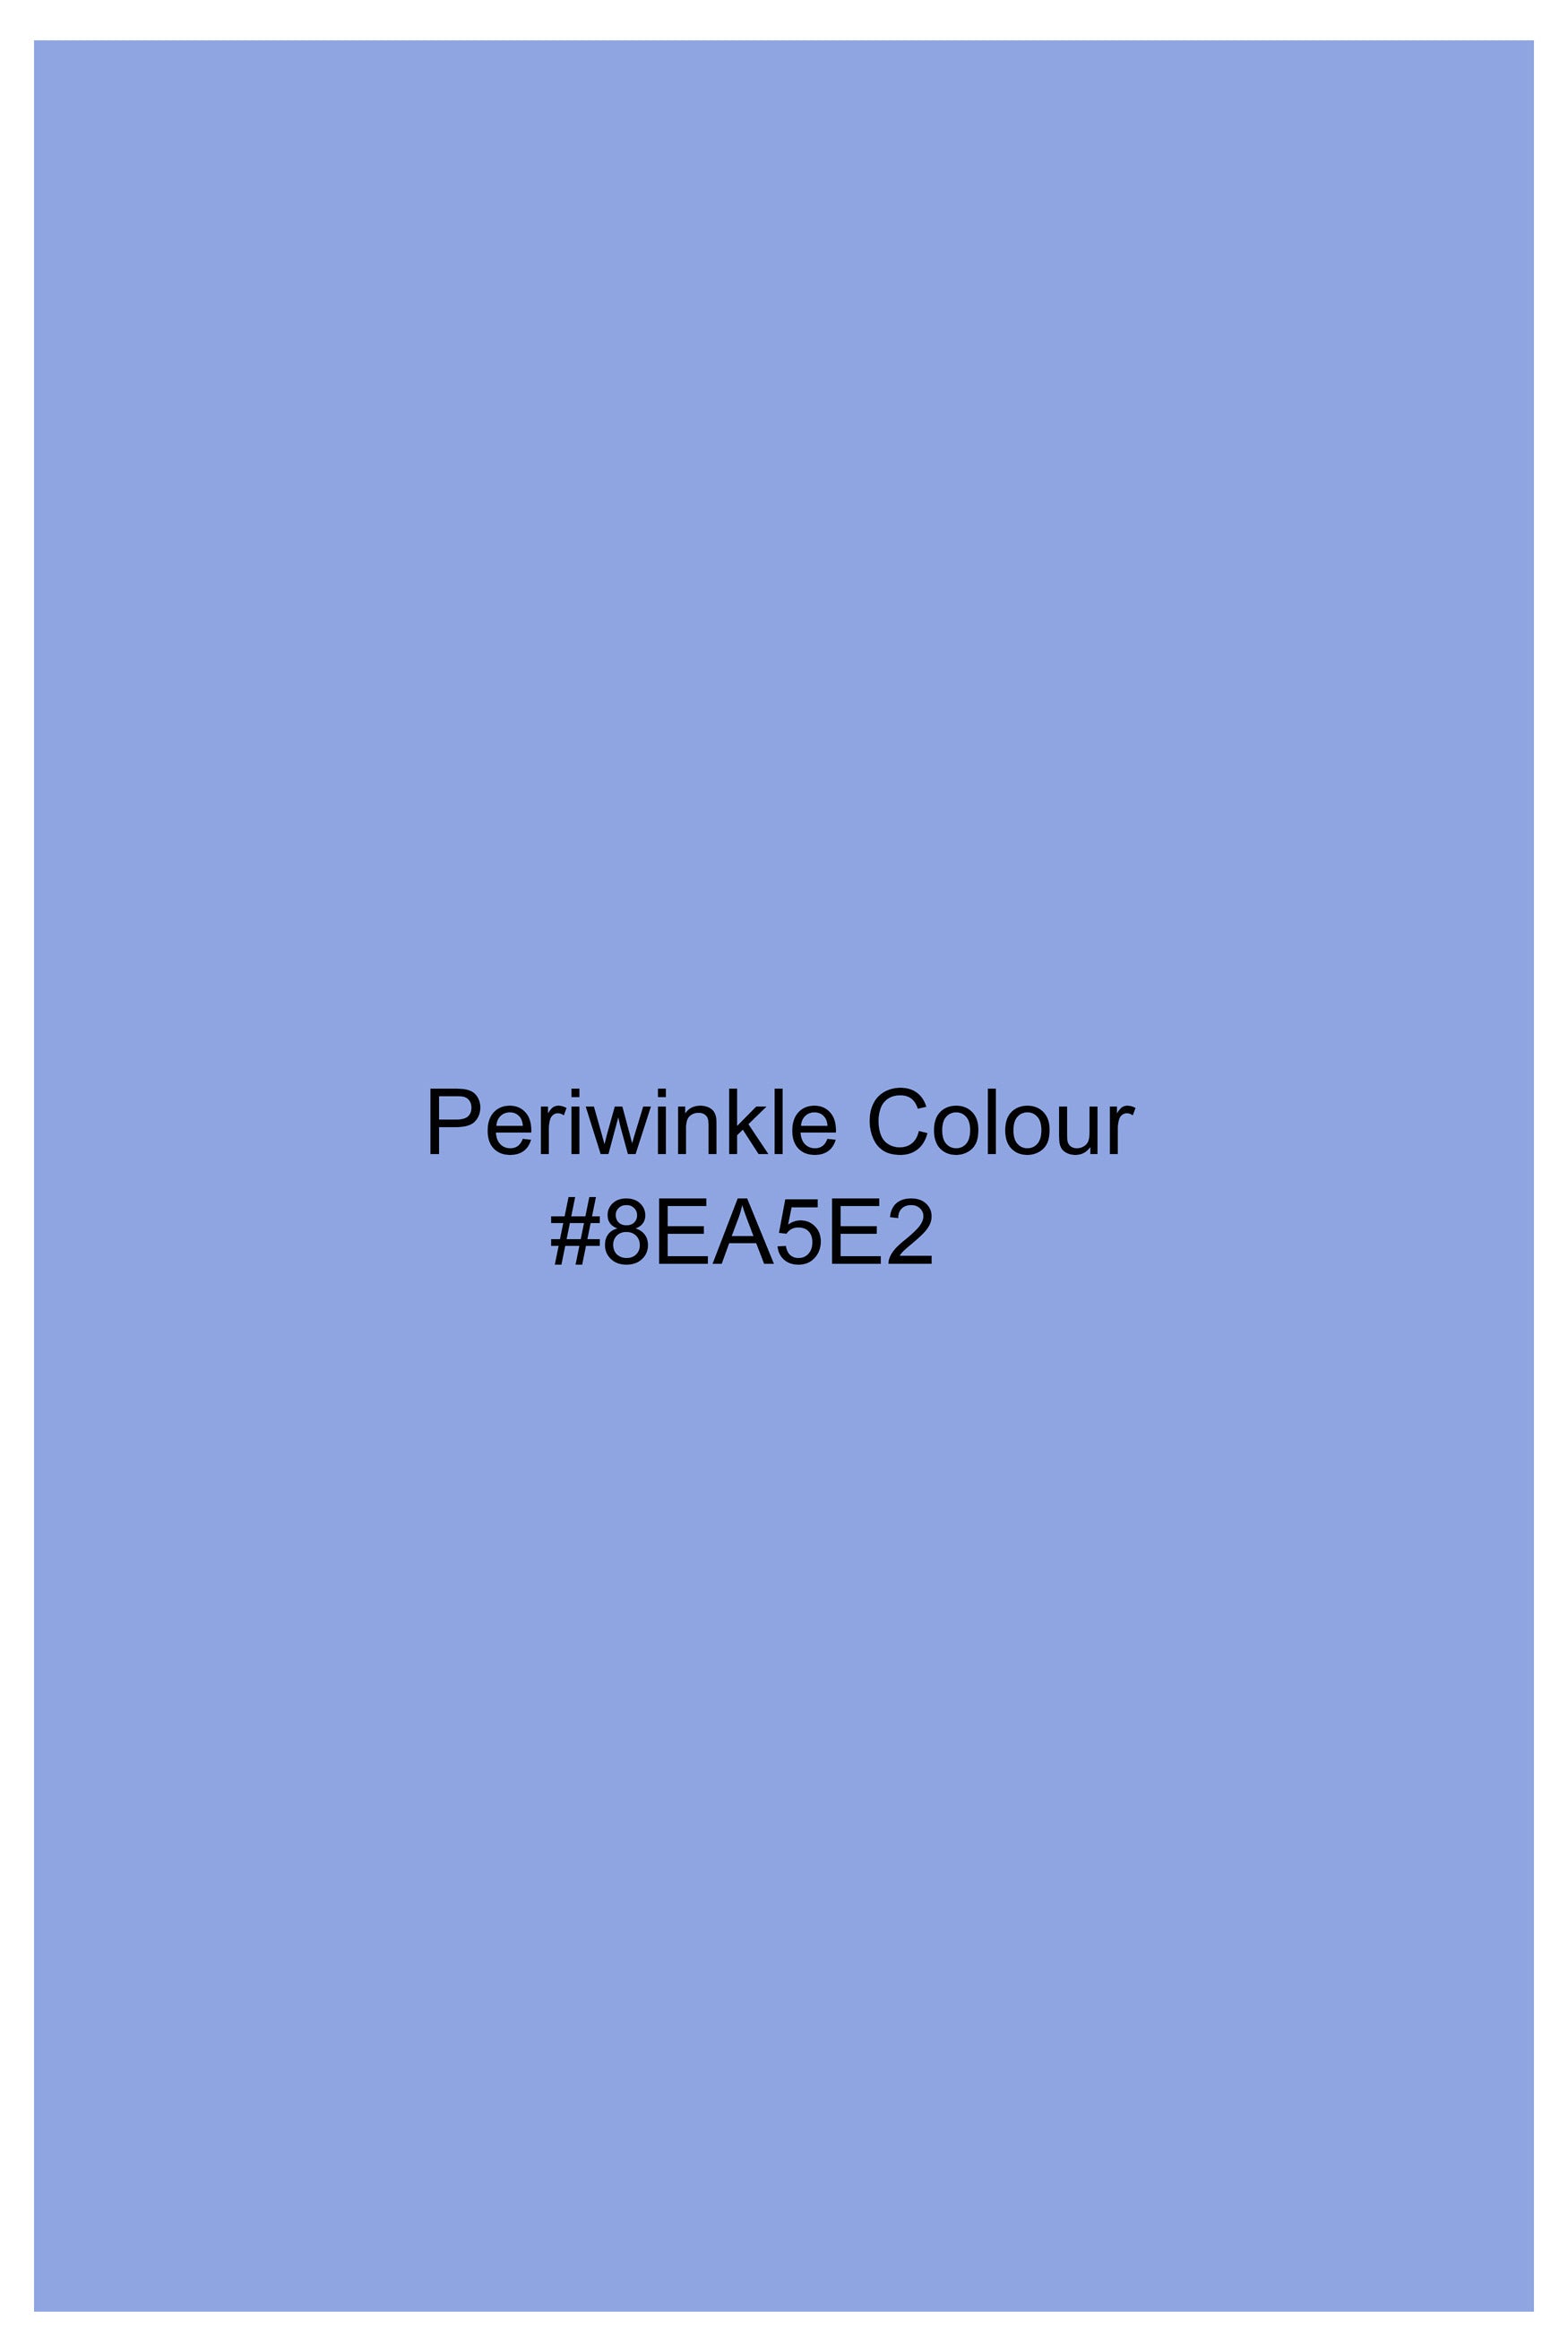 Periwinkle Blue Twill Premium Cotton Shorts SR405-28, SR405-30, SR405-32, SR405-34, SR405-36, SR405-38, SR405-40, SR405-42, SR405-44